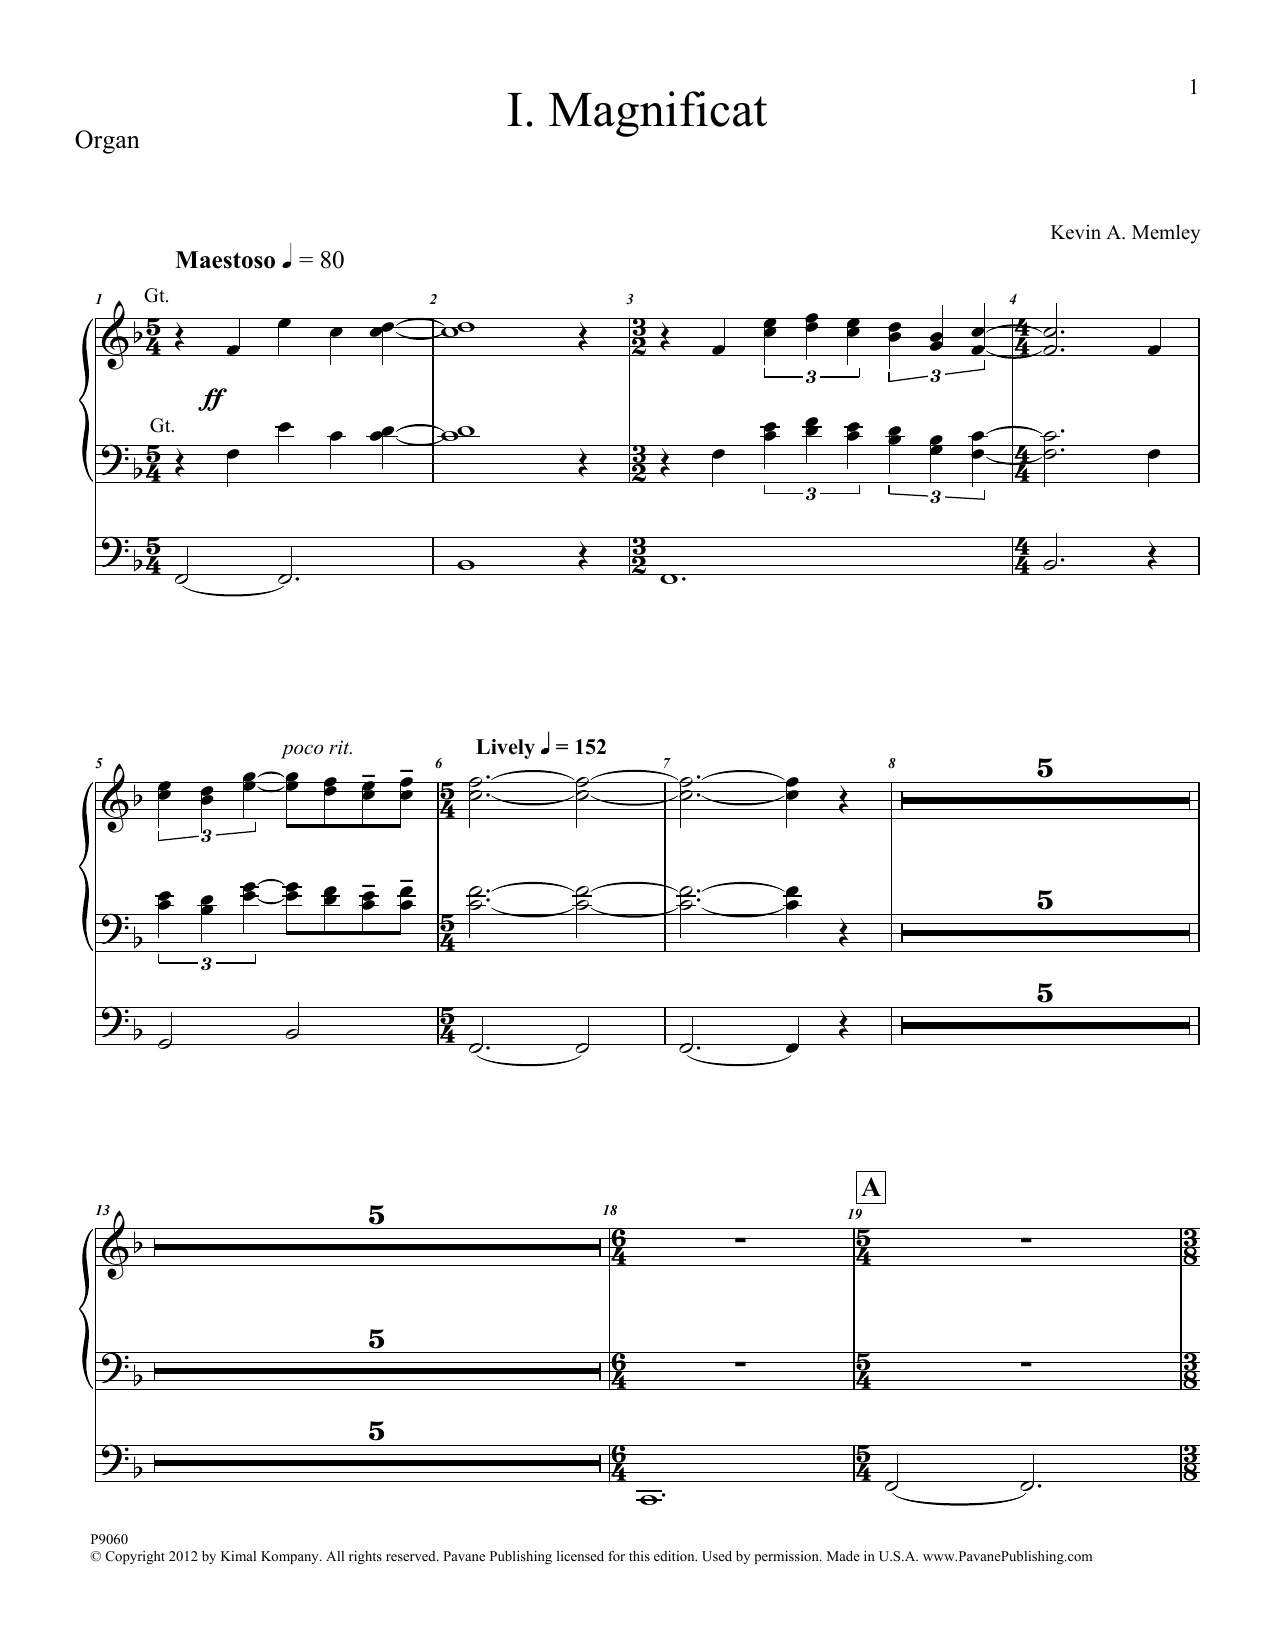 Kevin Memley Magnificat (Brass Quintet) (Parts) - Organ Sheet Music Notes & Chords for Choir Instrumental Pak - Download or Print PDF